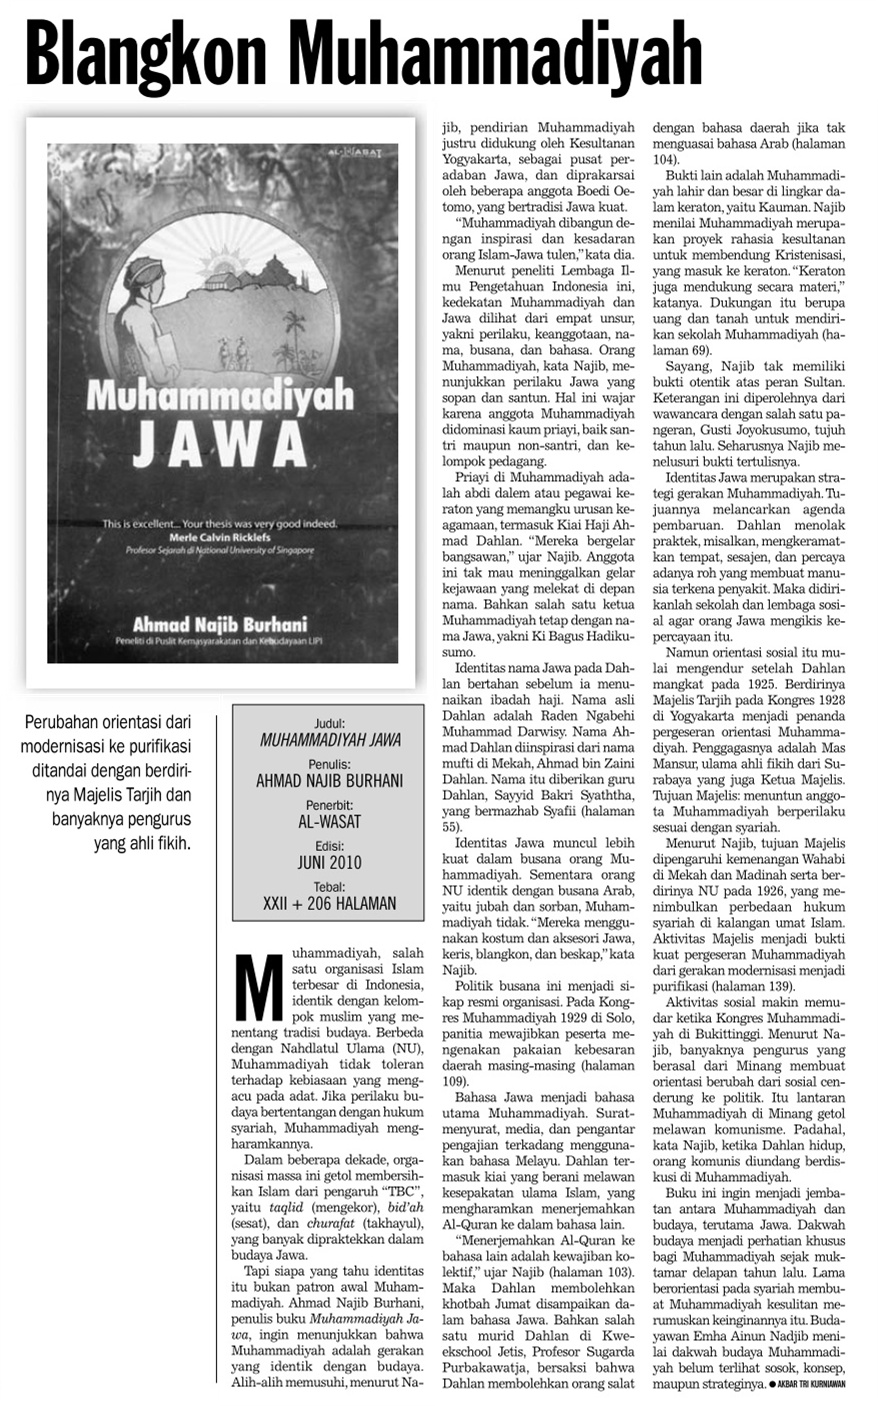 Muhammadiyah Studies: September 2010